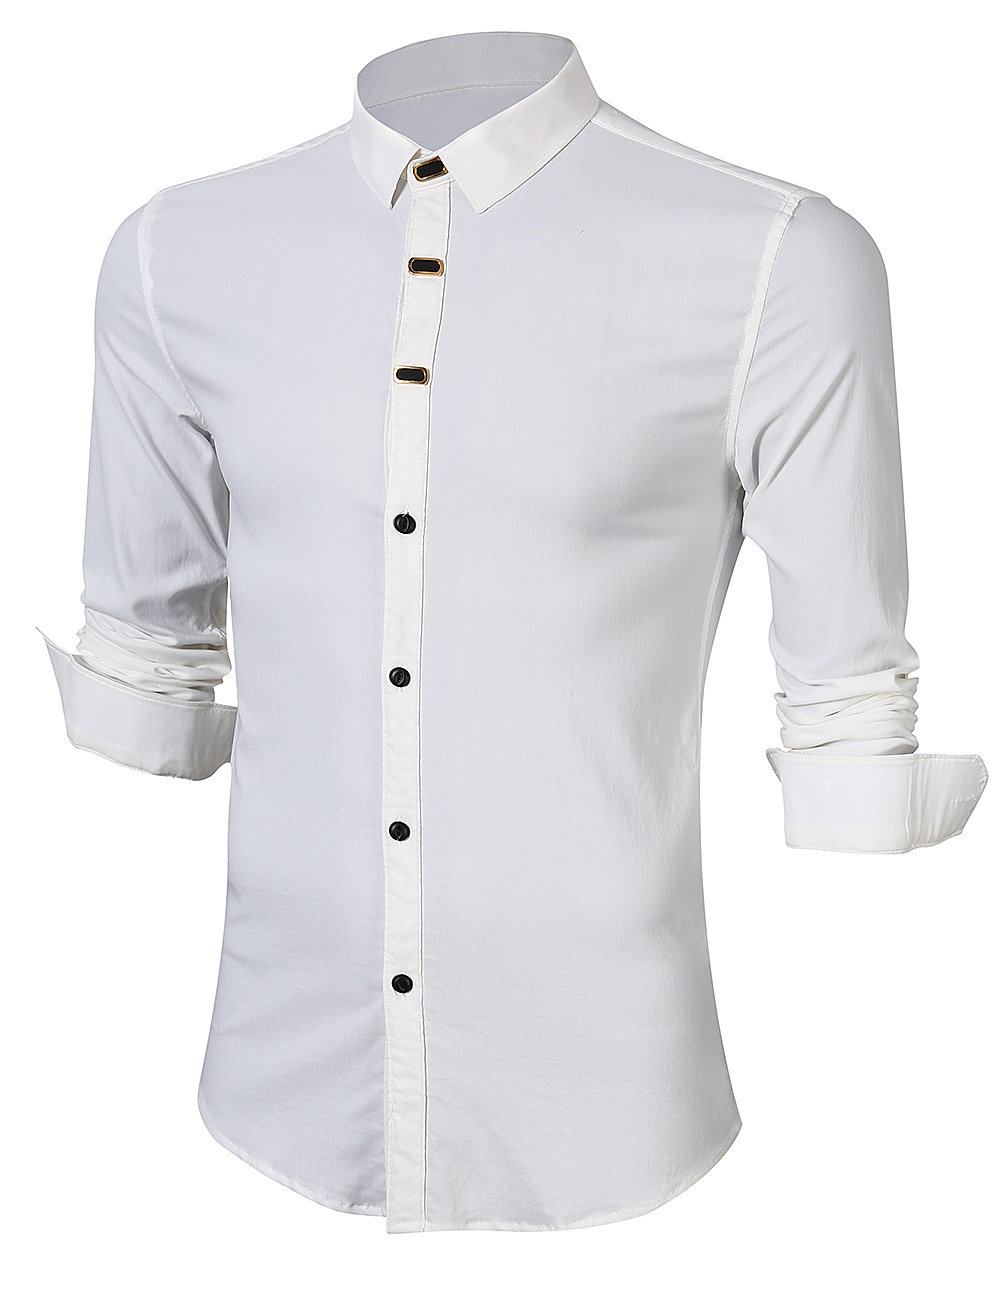 US Yong Horse Men's Fashion Metal Button Decoration Long Sleeve Shirt